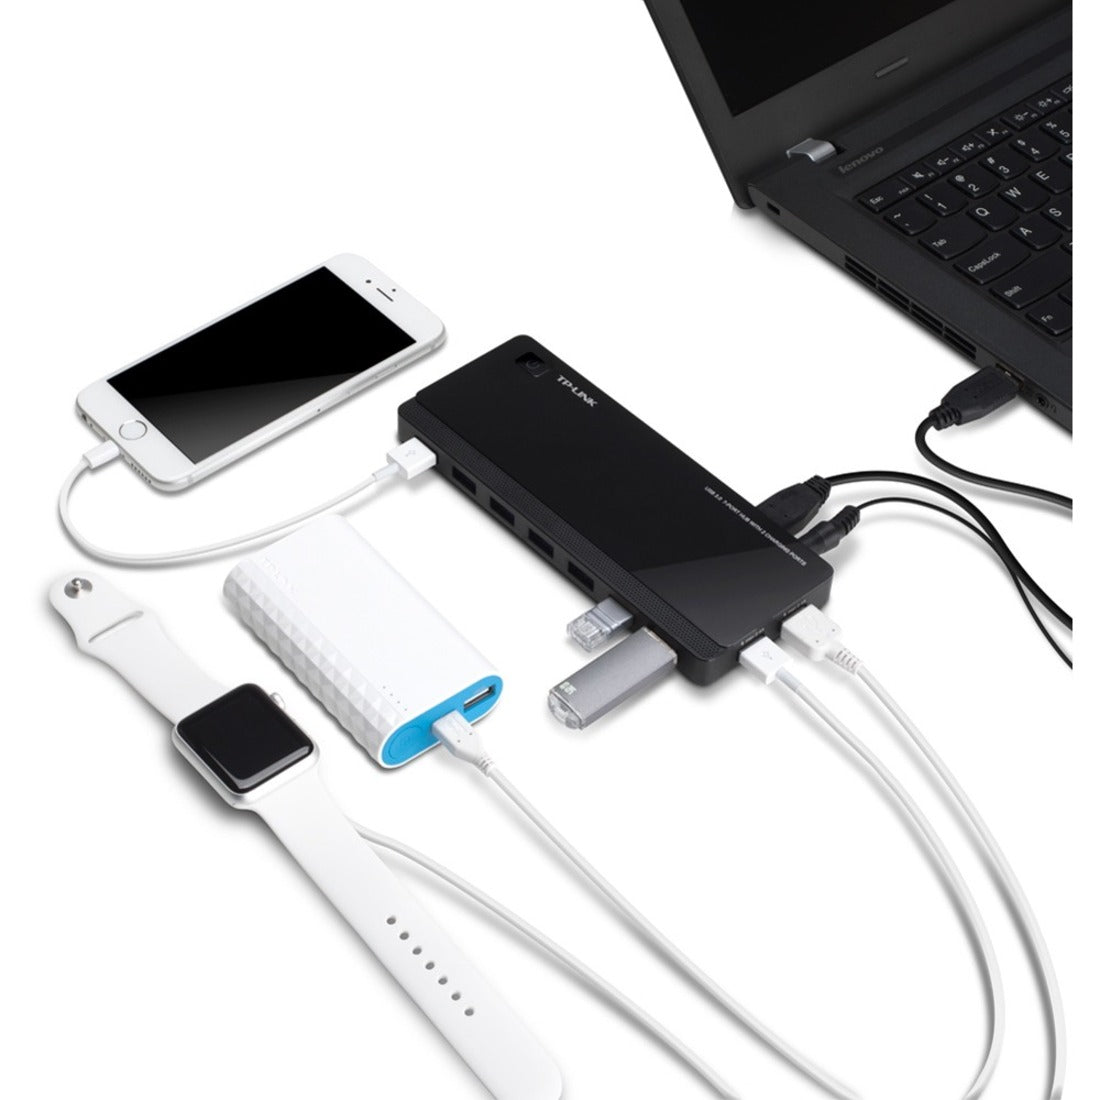 TP-Link UH720 USB 3.0 7端口集线器，带2个充电端口，扩展USB连接并同时充电设备 品牌名称：TP-Link 品牌名称翻译：普联